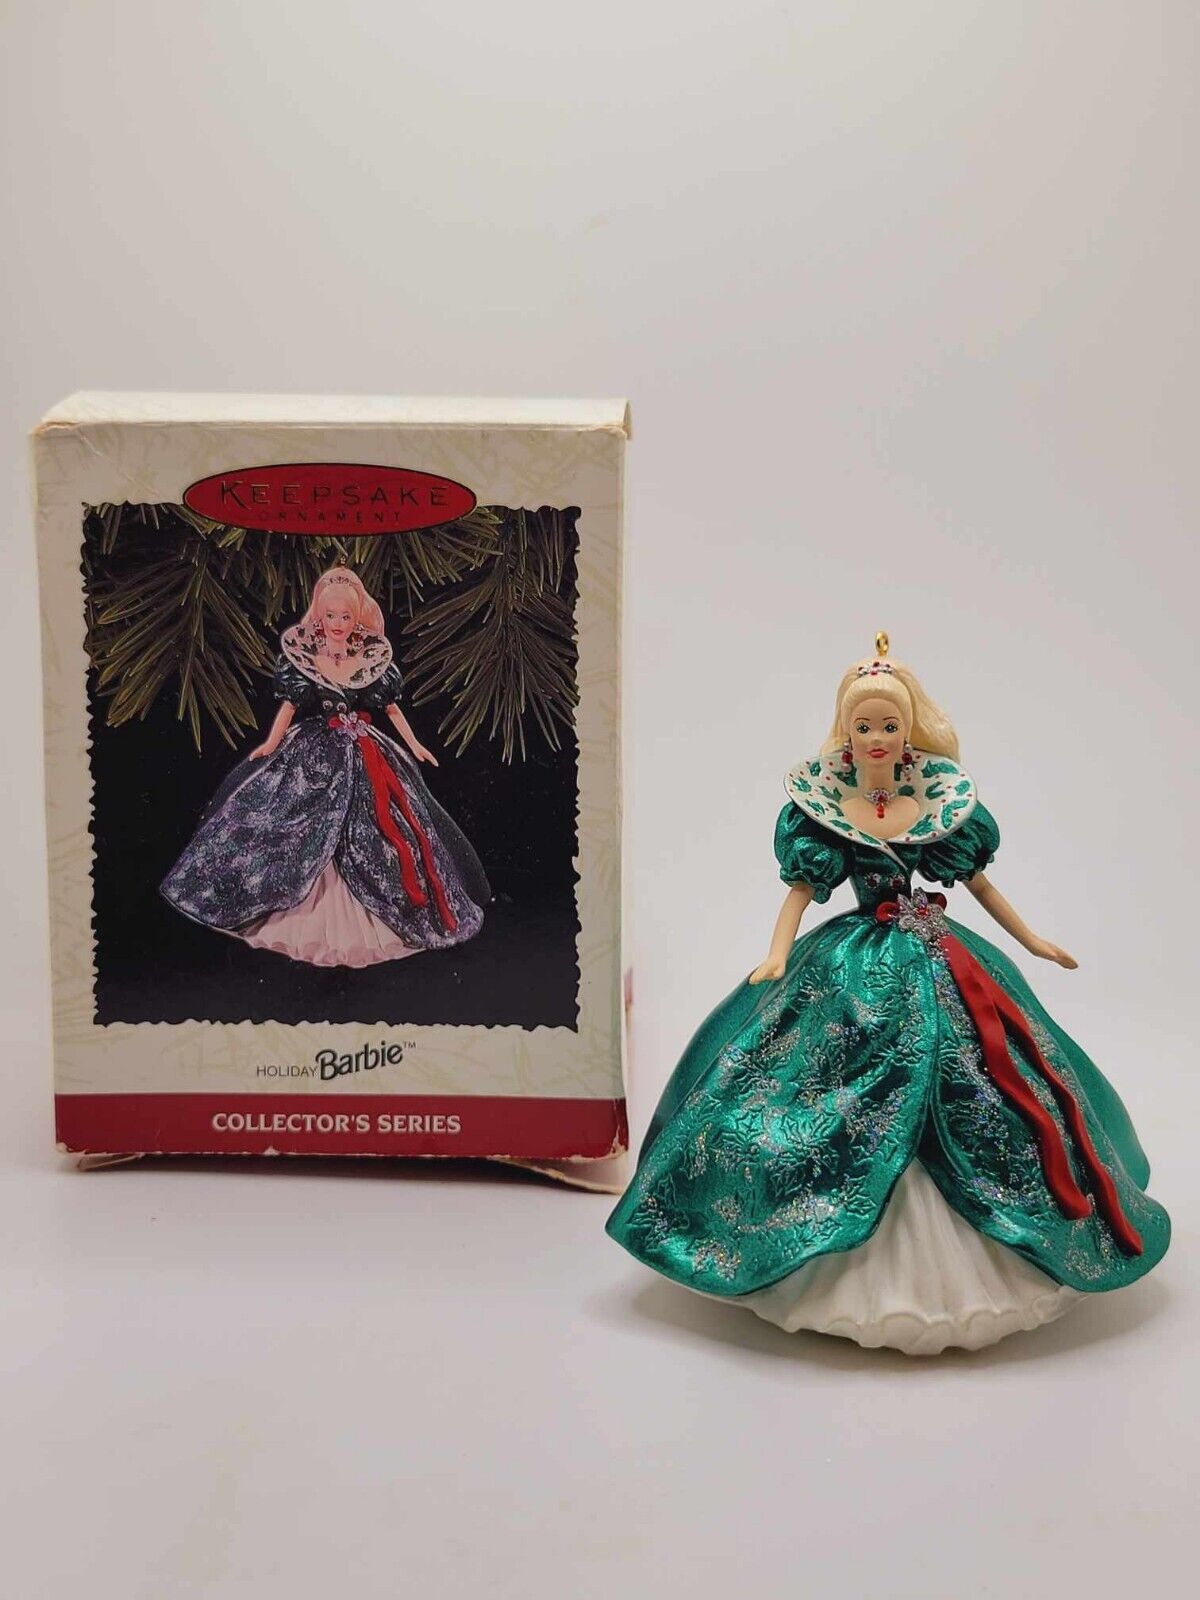 1995 Hallmark Keepsake Holiday Barbie Collector's Series Christmas Ornament 